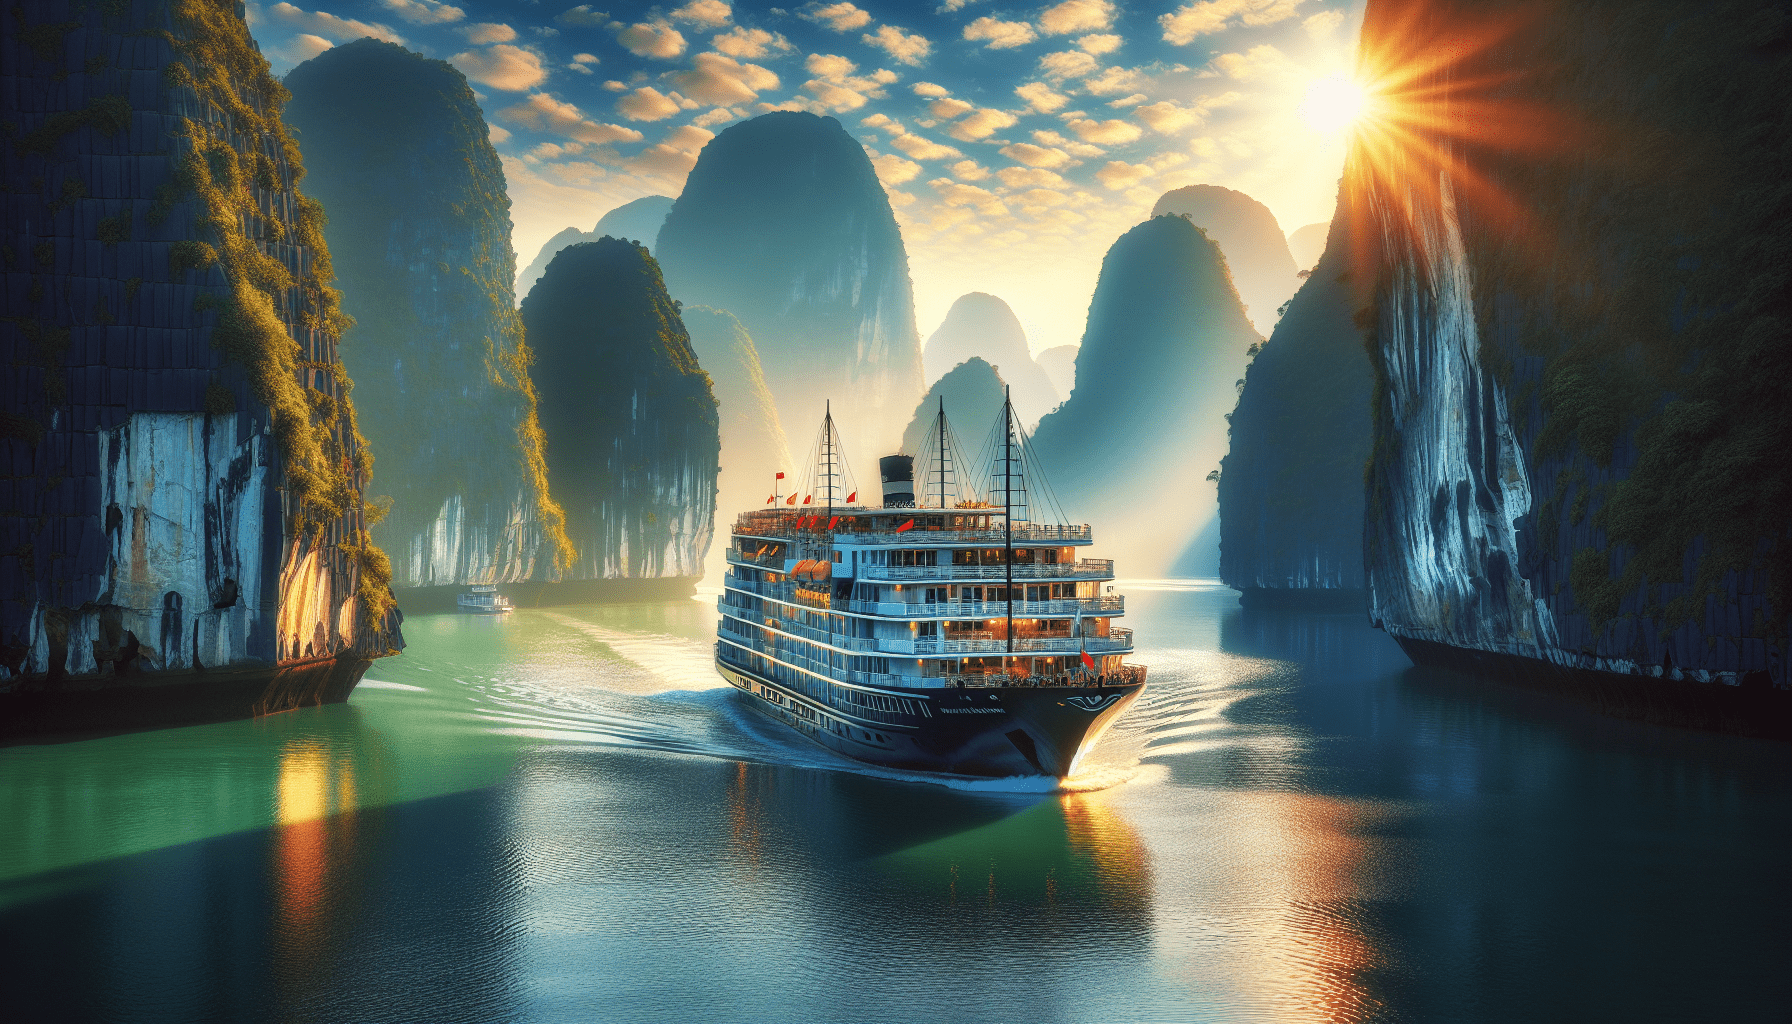 What Cruise Companies Go To Vietnam?